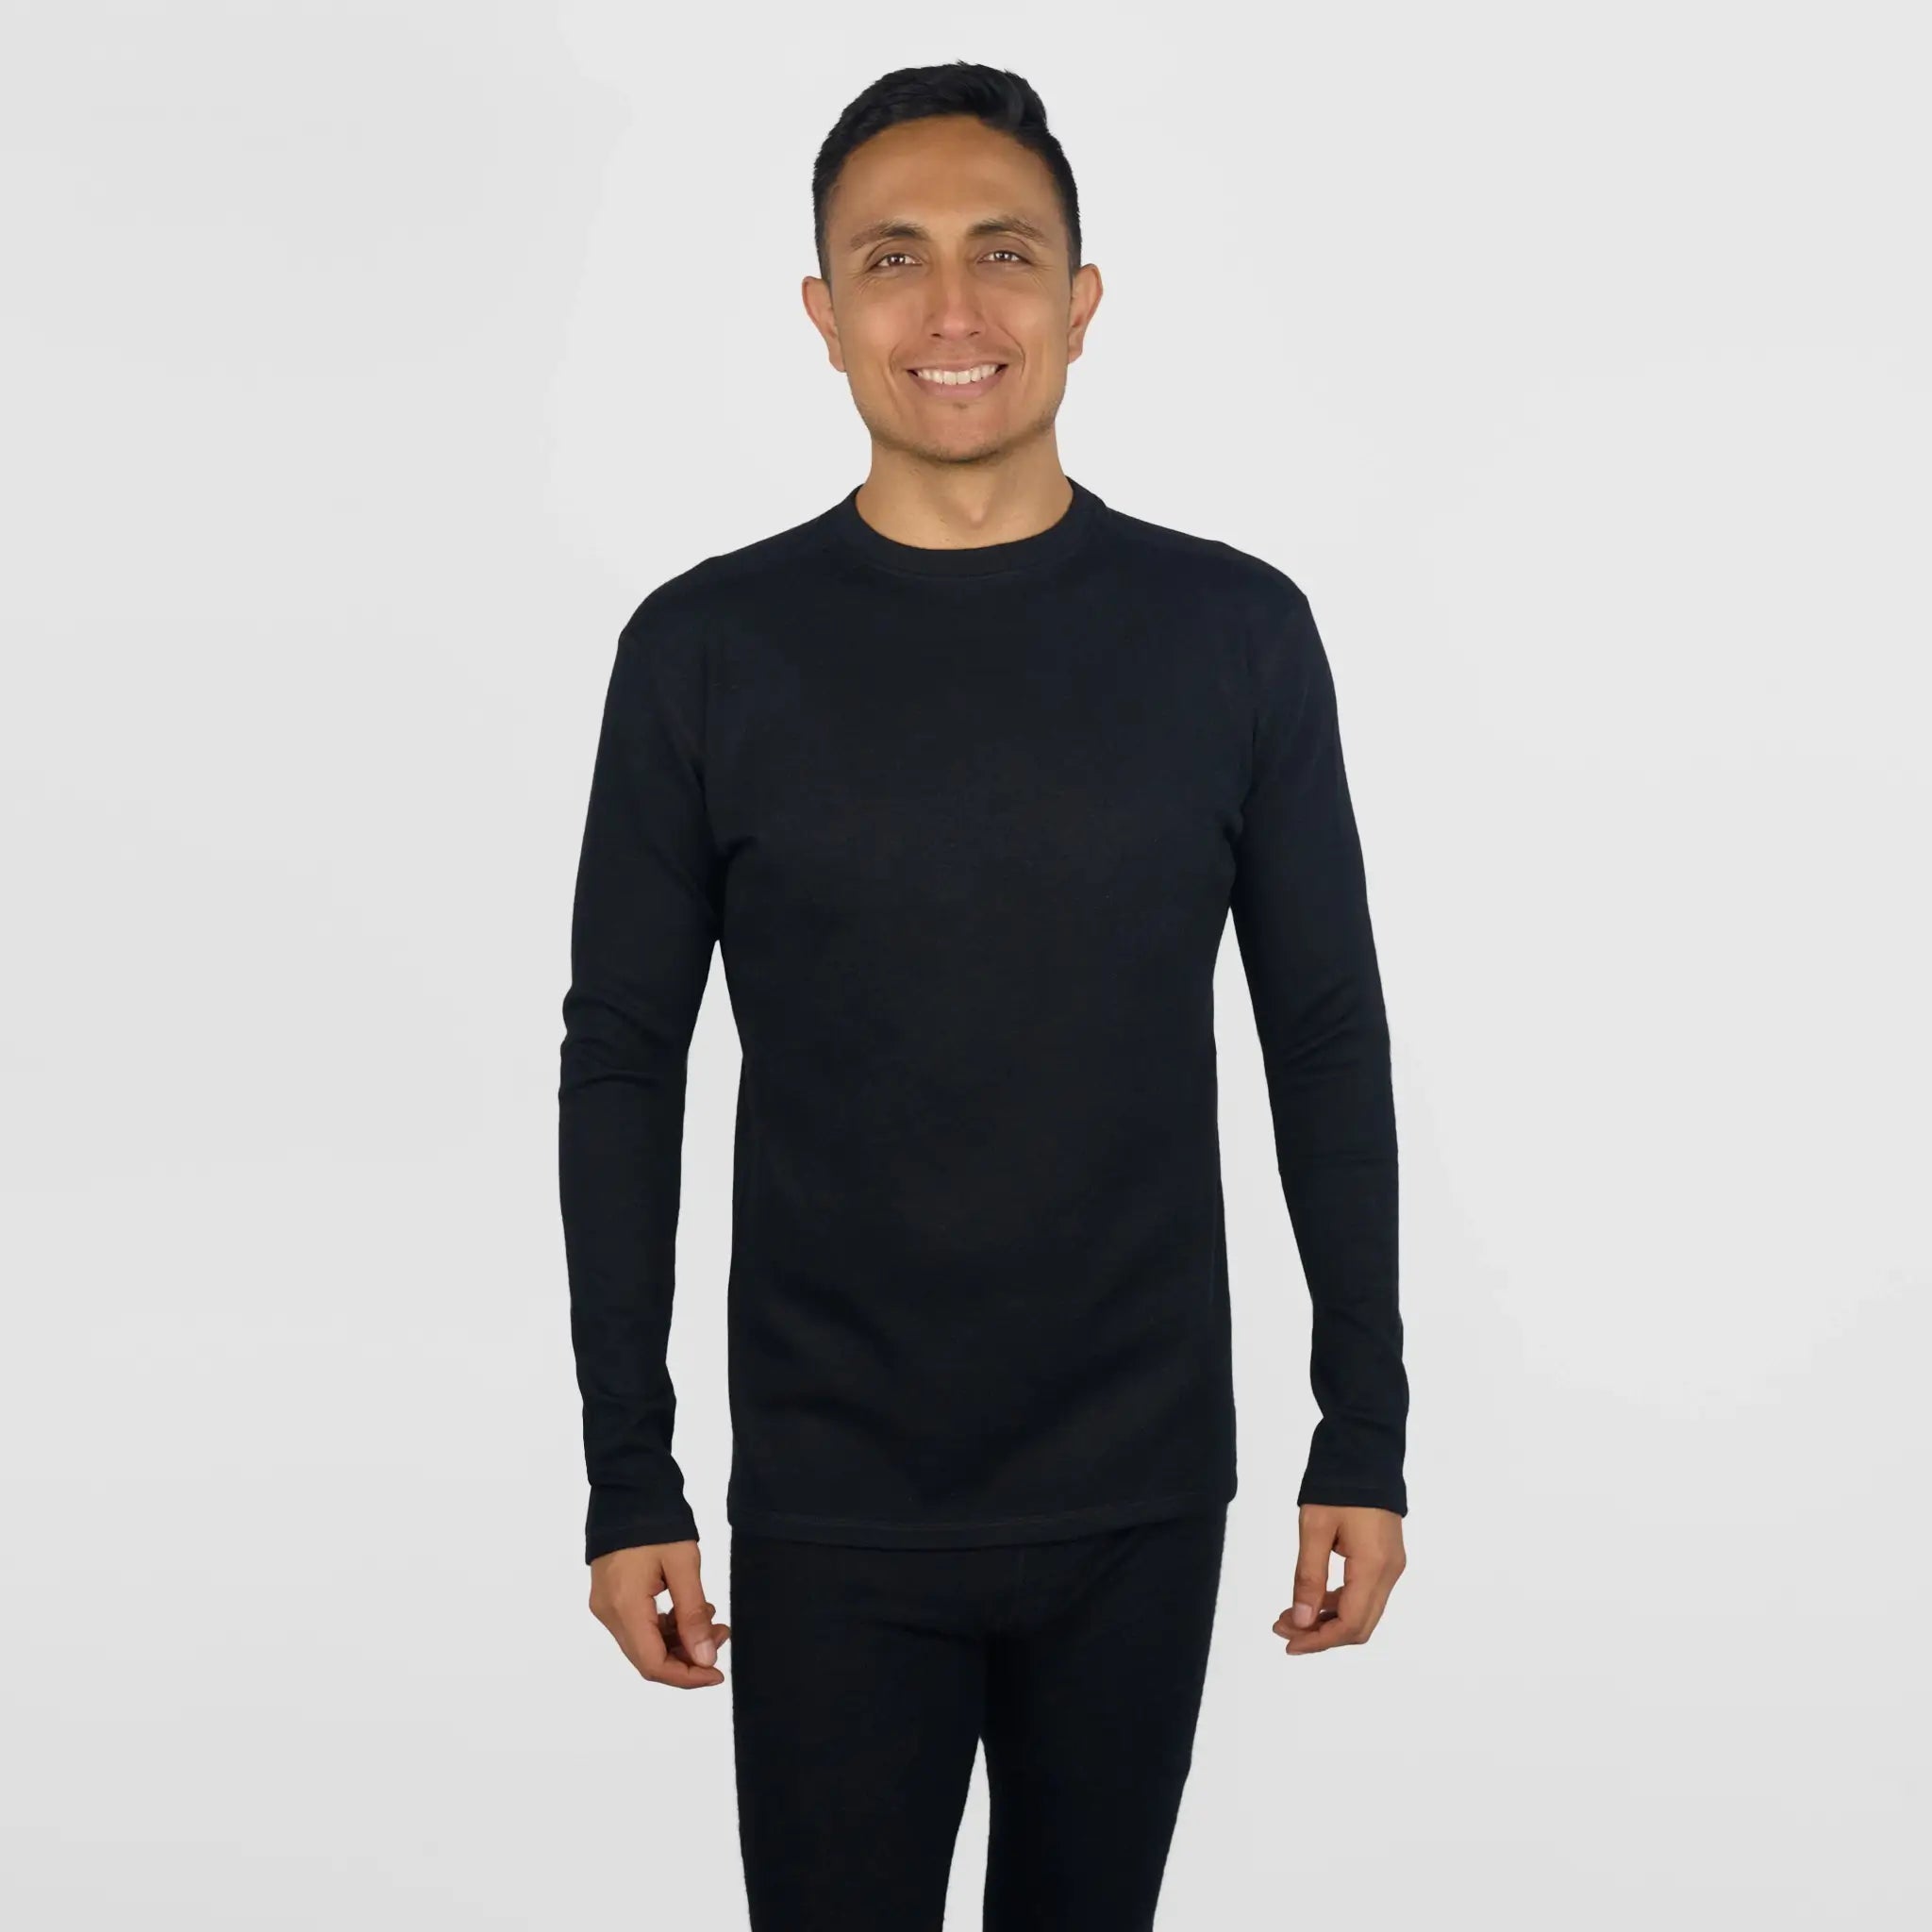 mens alpaca sweater fast drying lightweight color black